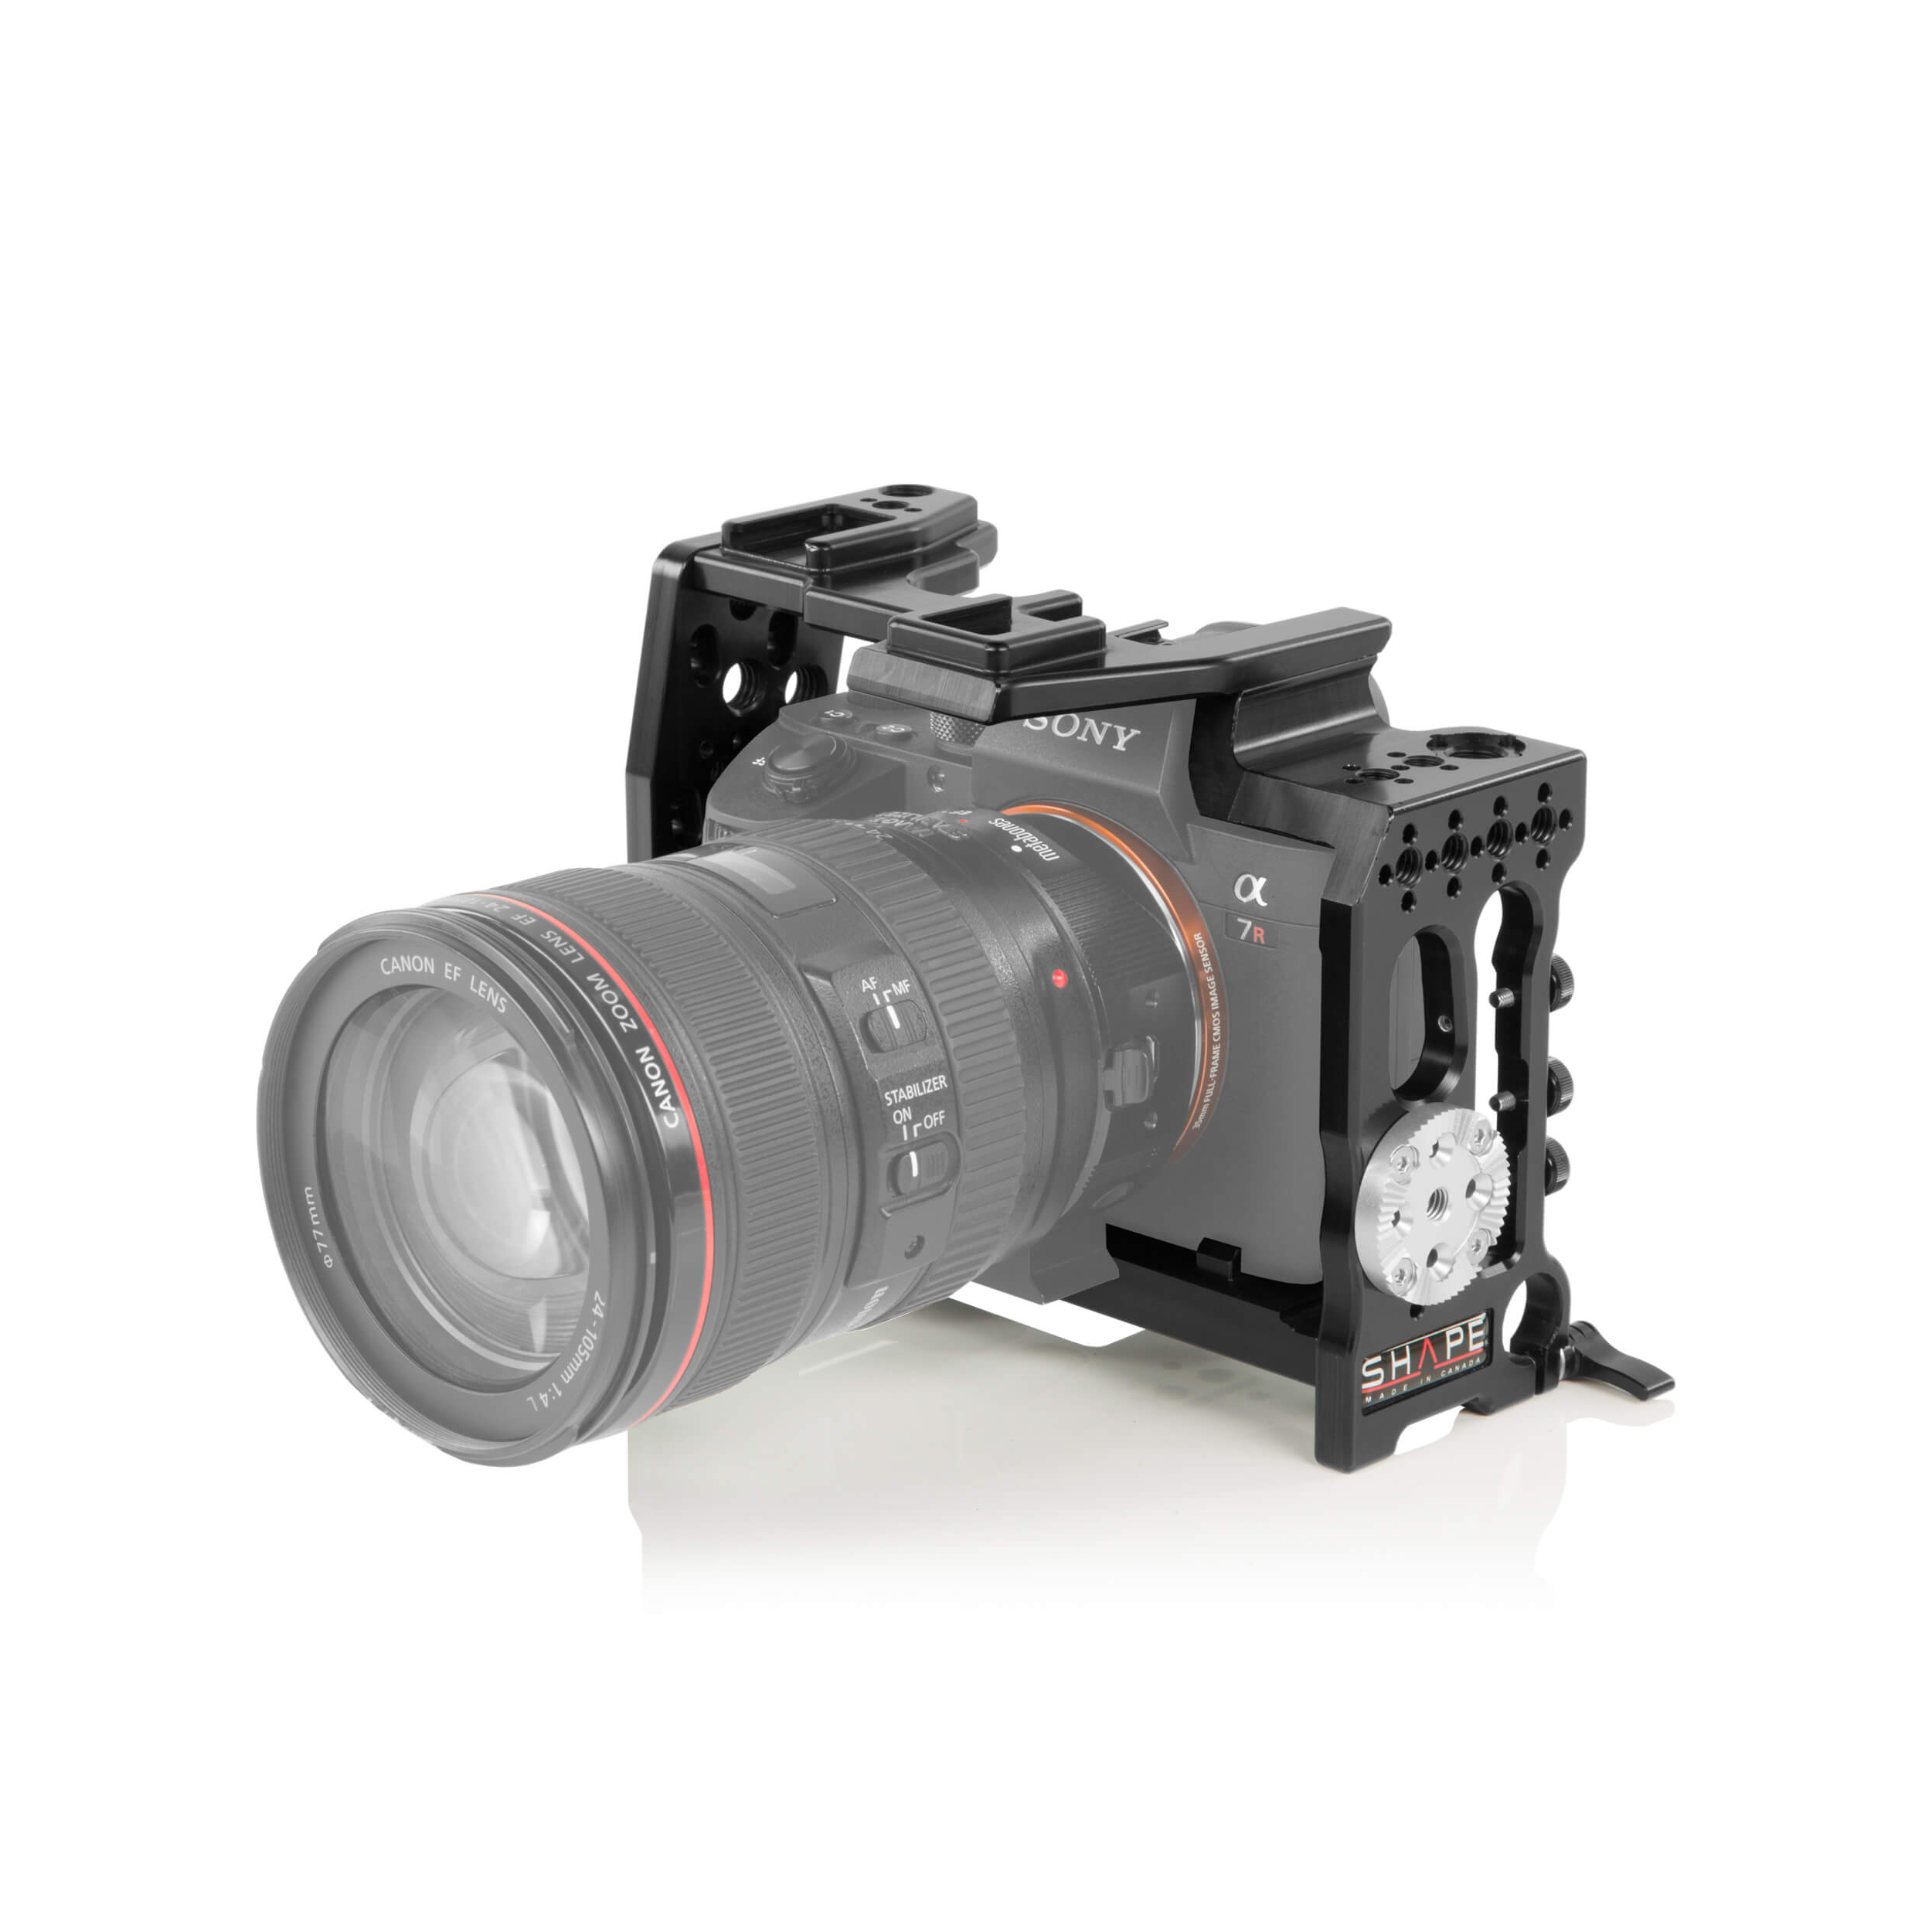 SHAPE Offset Shoulder Mount Kit for Sony a7R III/a7 III Camera